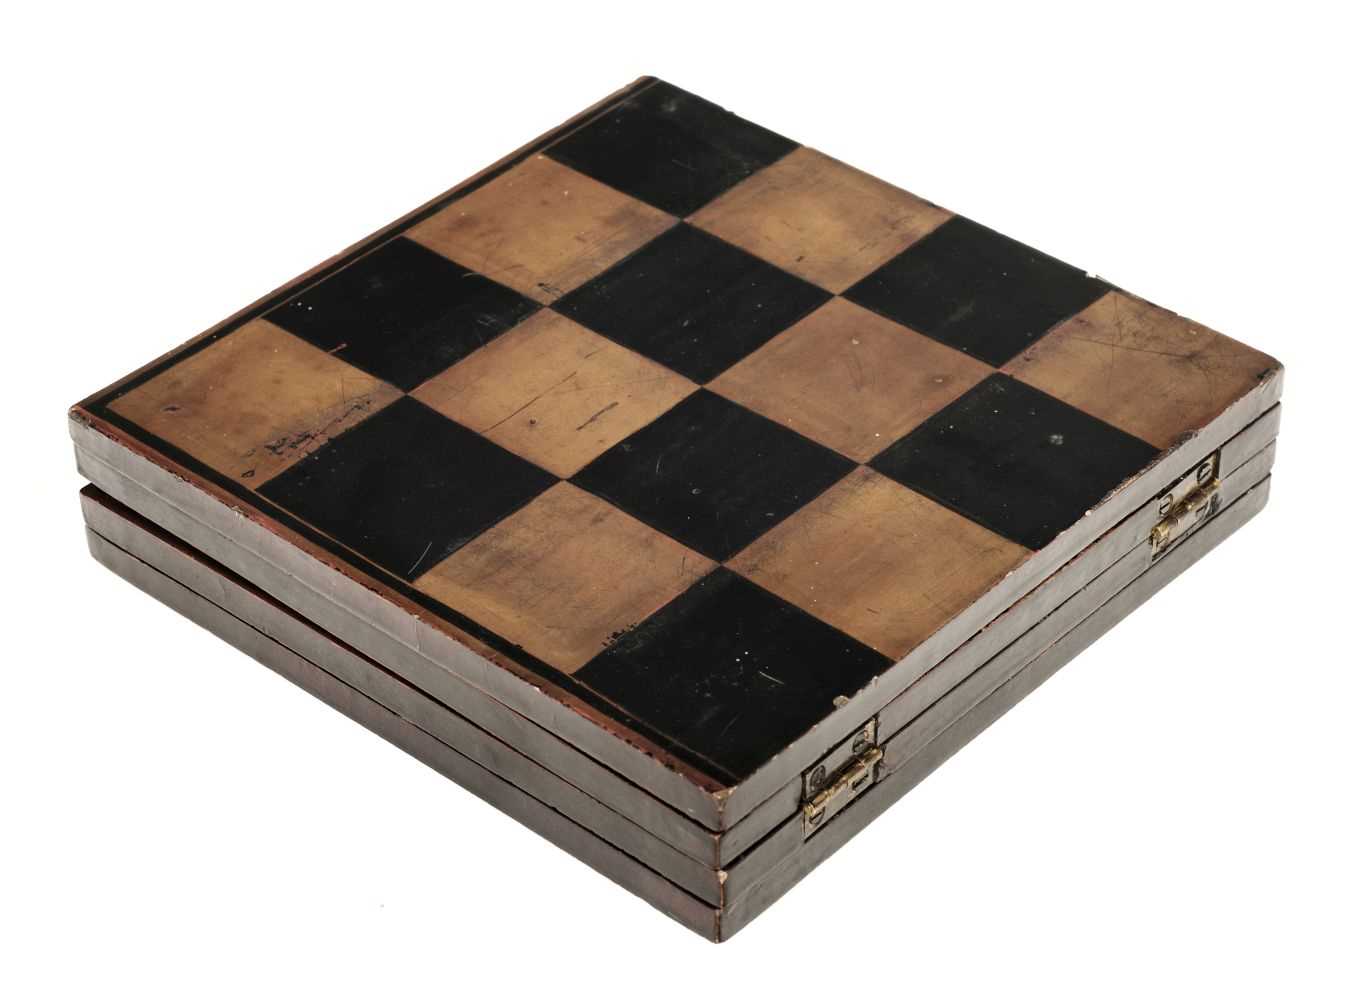 Lot 248 - Chess. A 19th-century folding chessboard